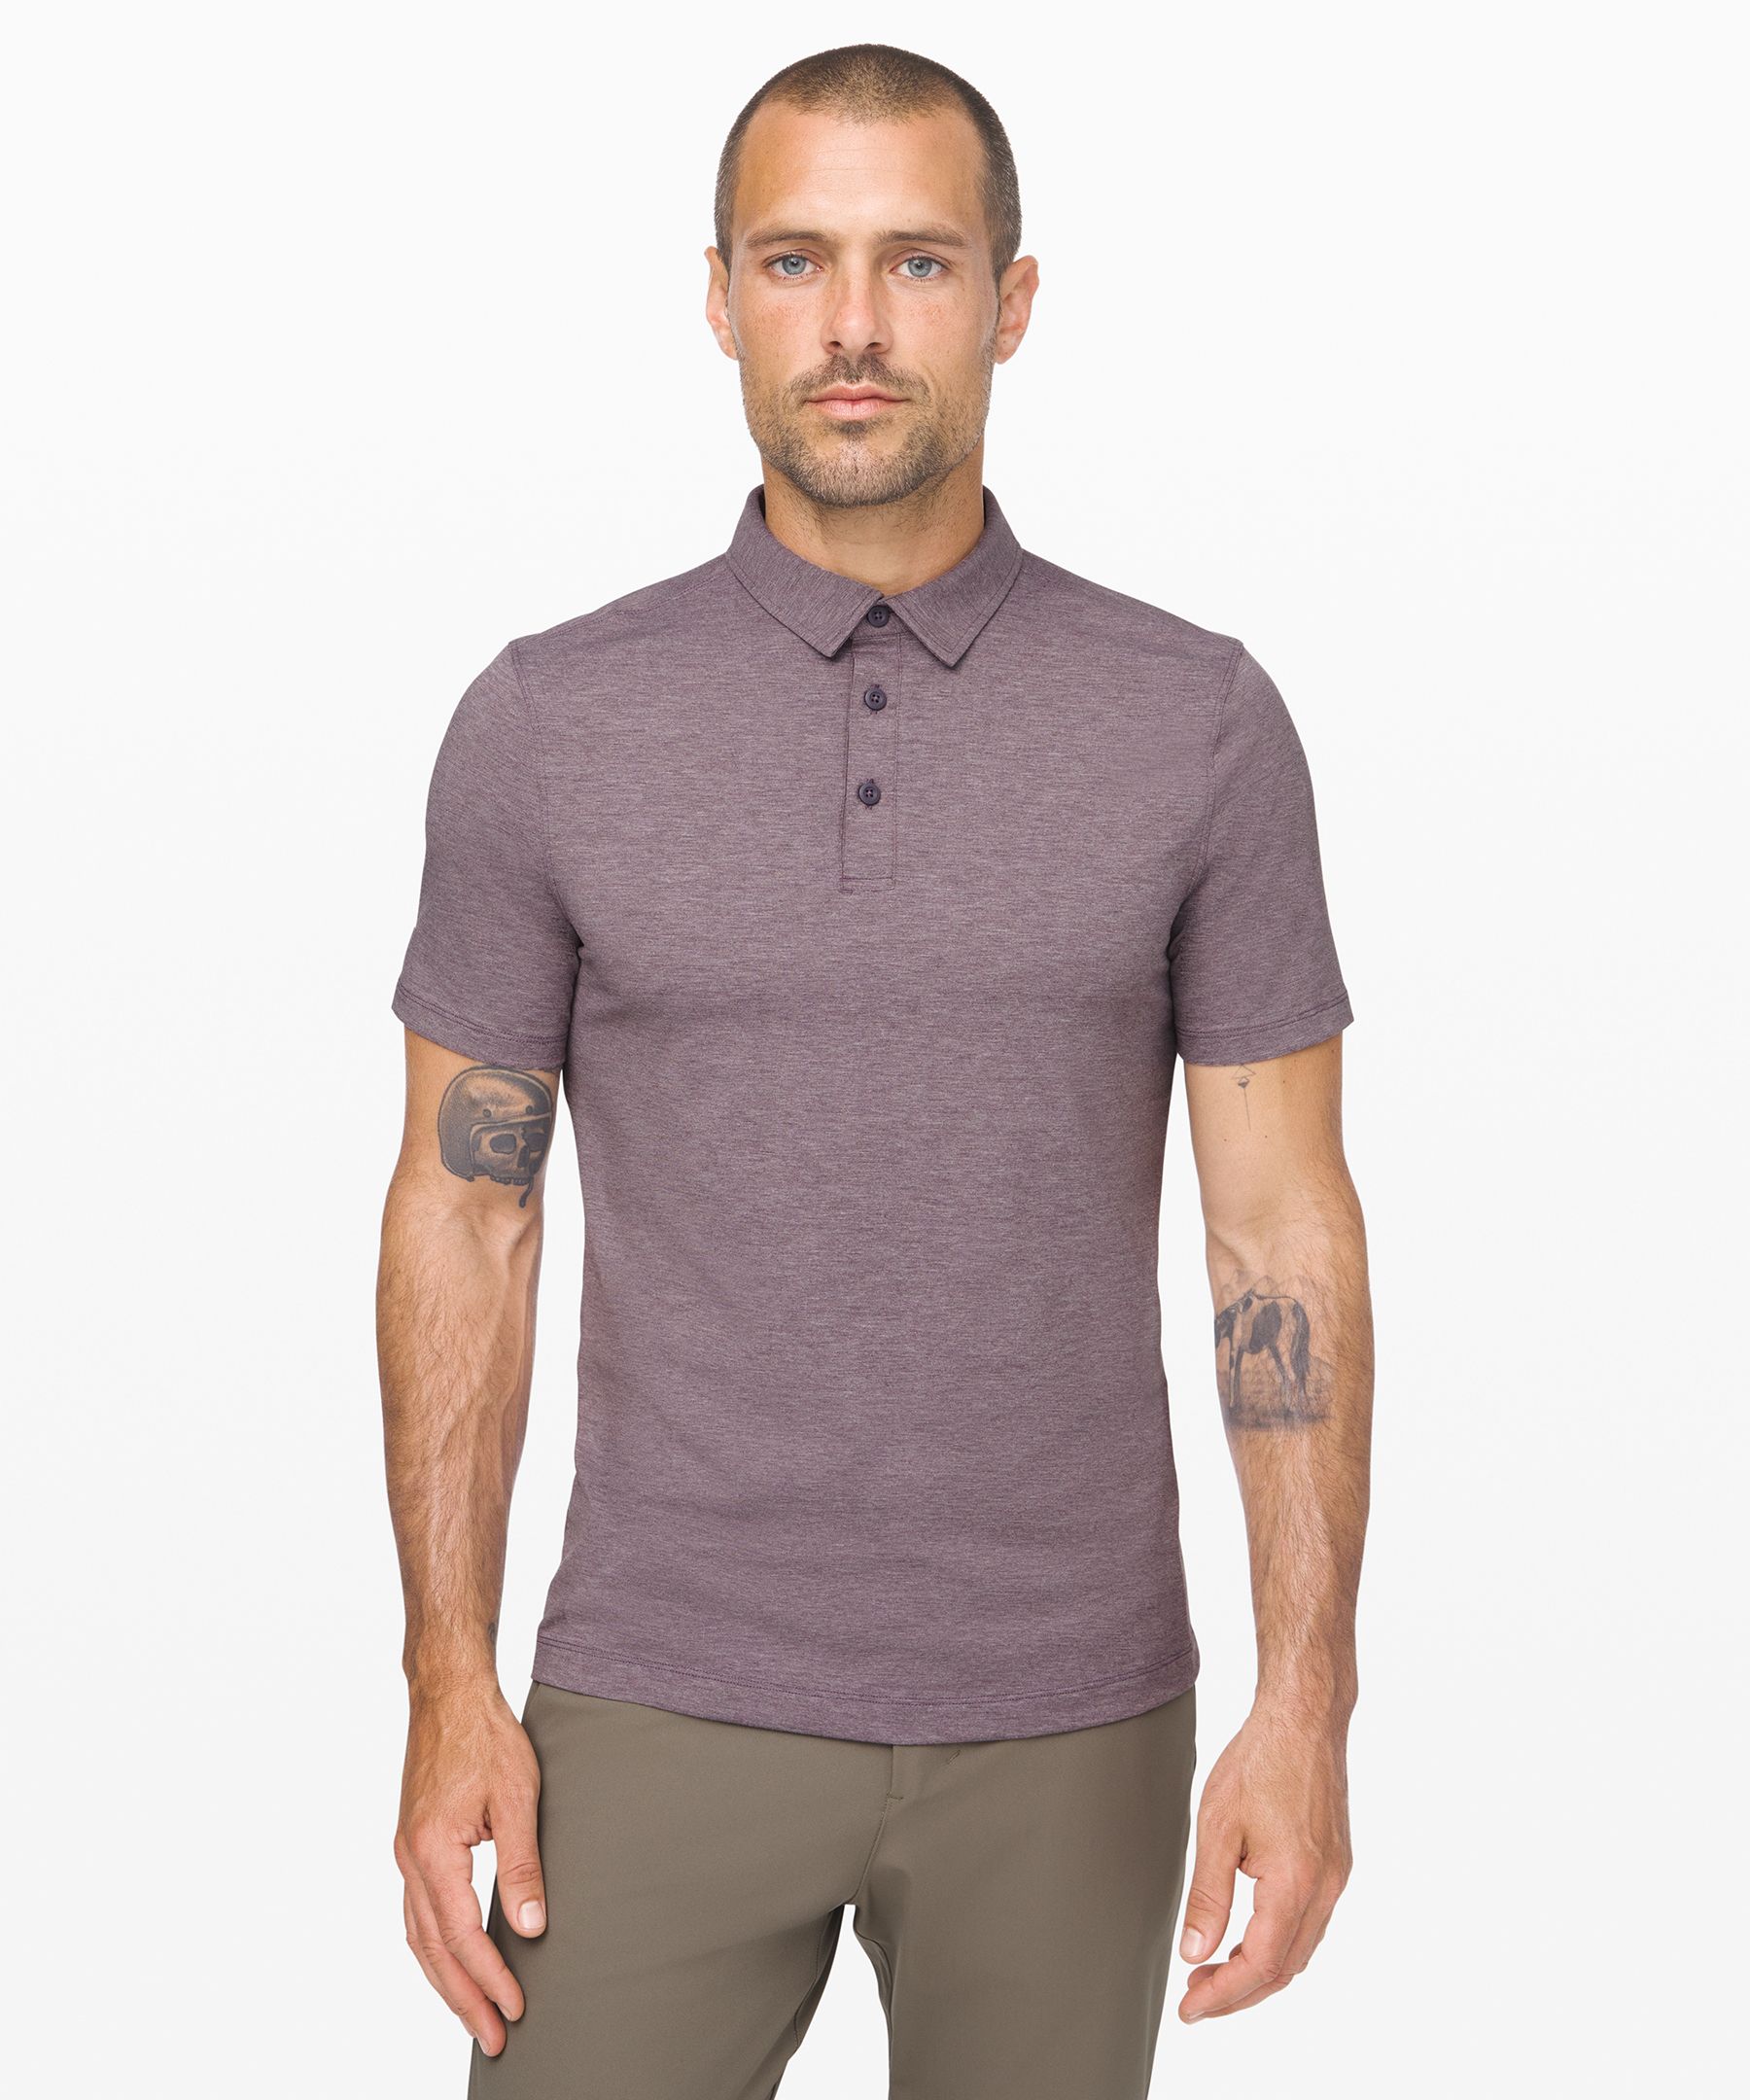 Lululemon Evolution Short Sleeve Polo Shirt - Smoked Spruce - lulu fanatics